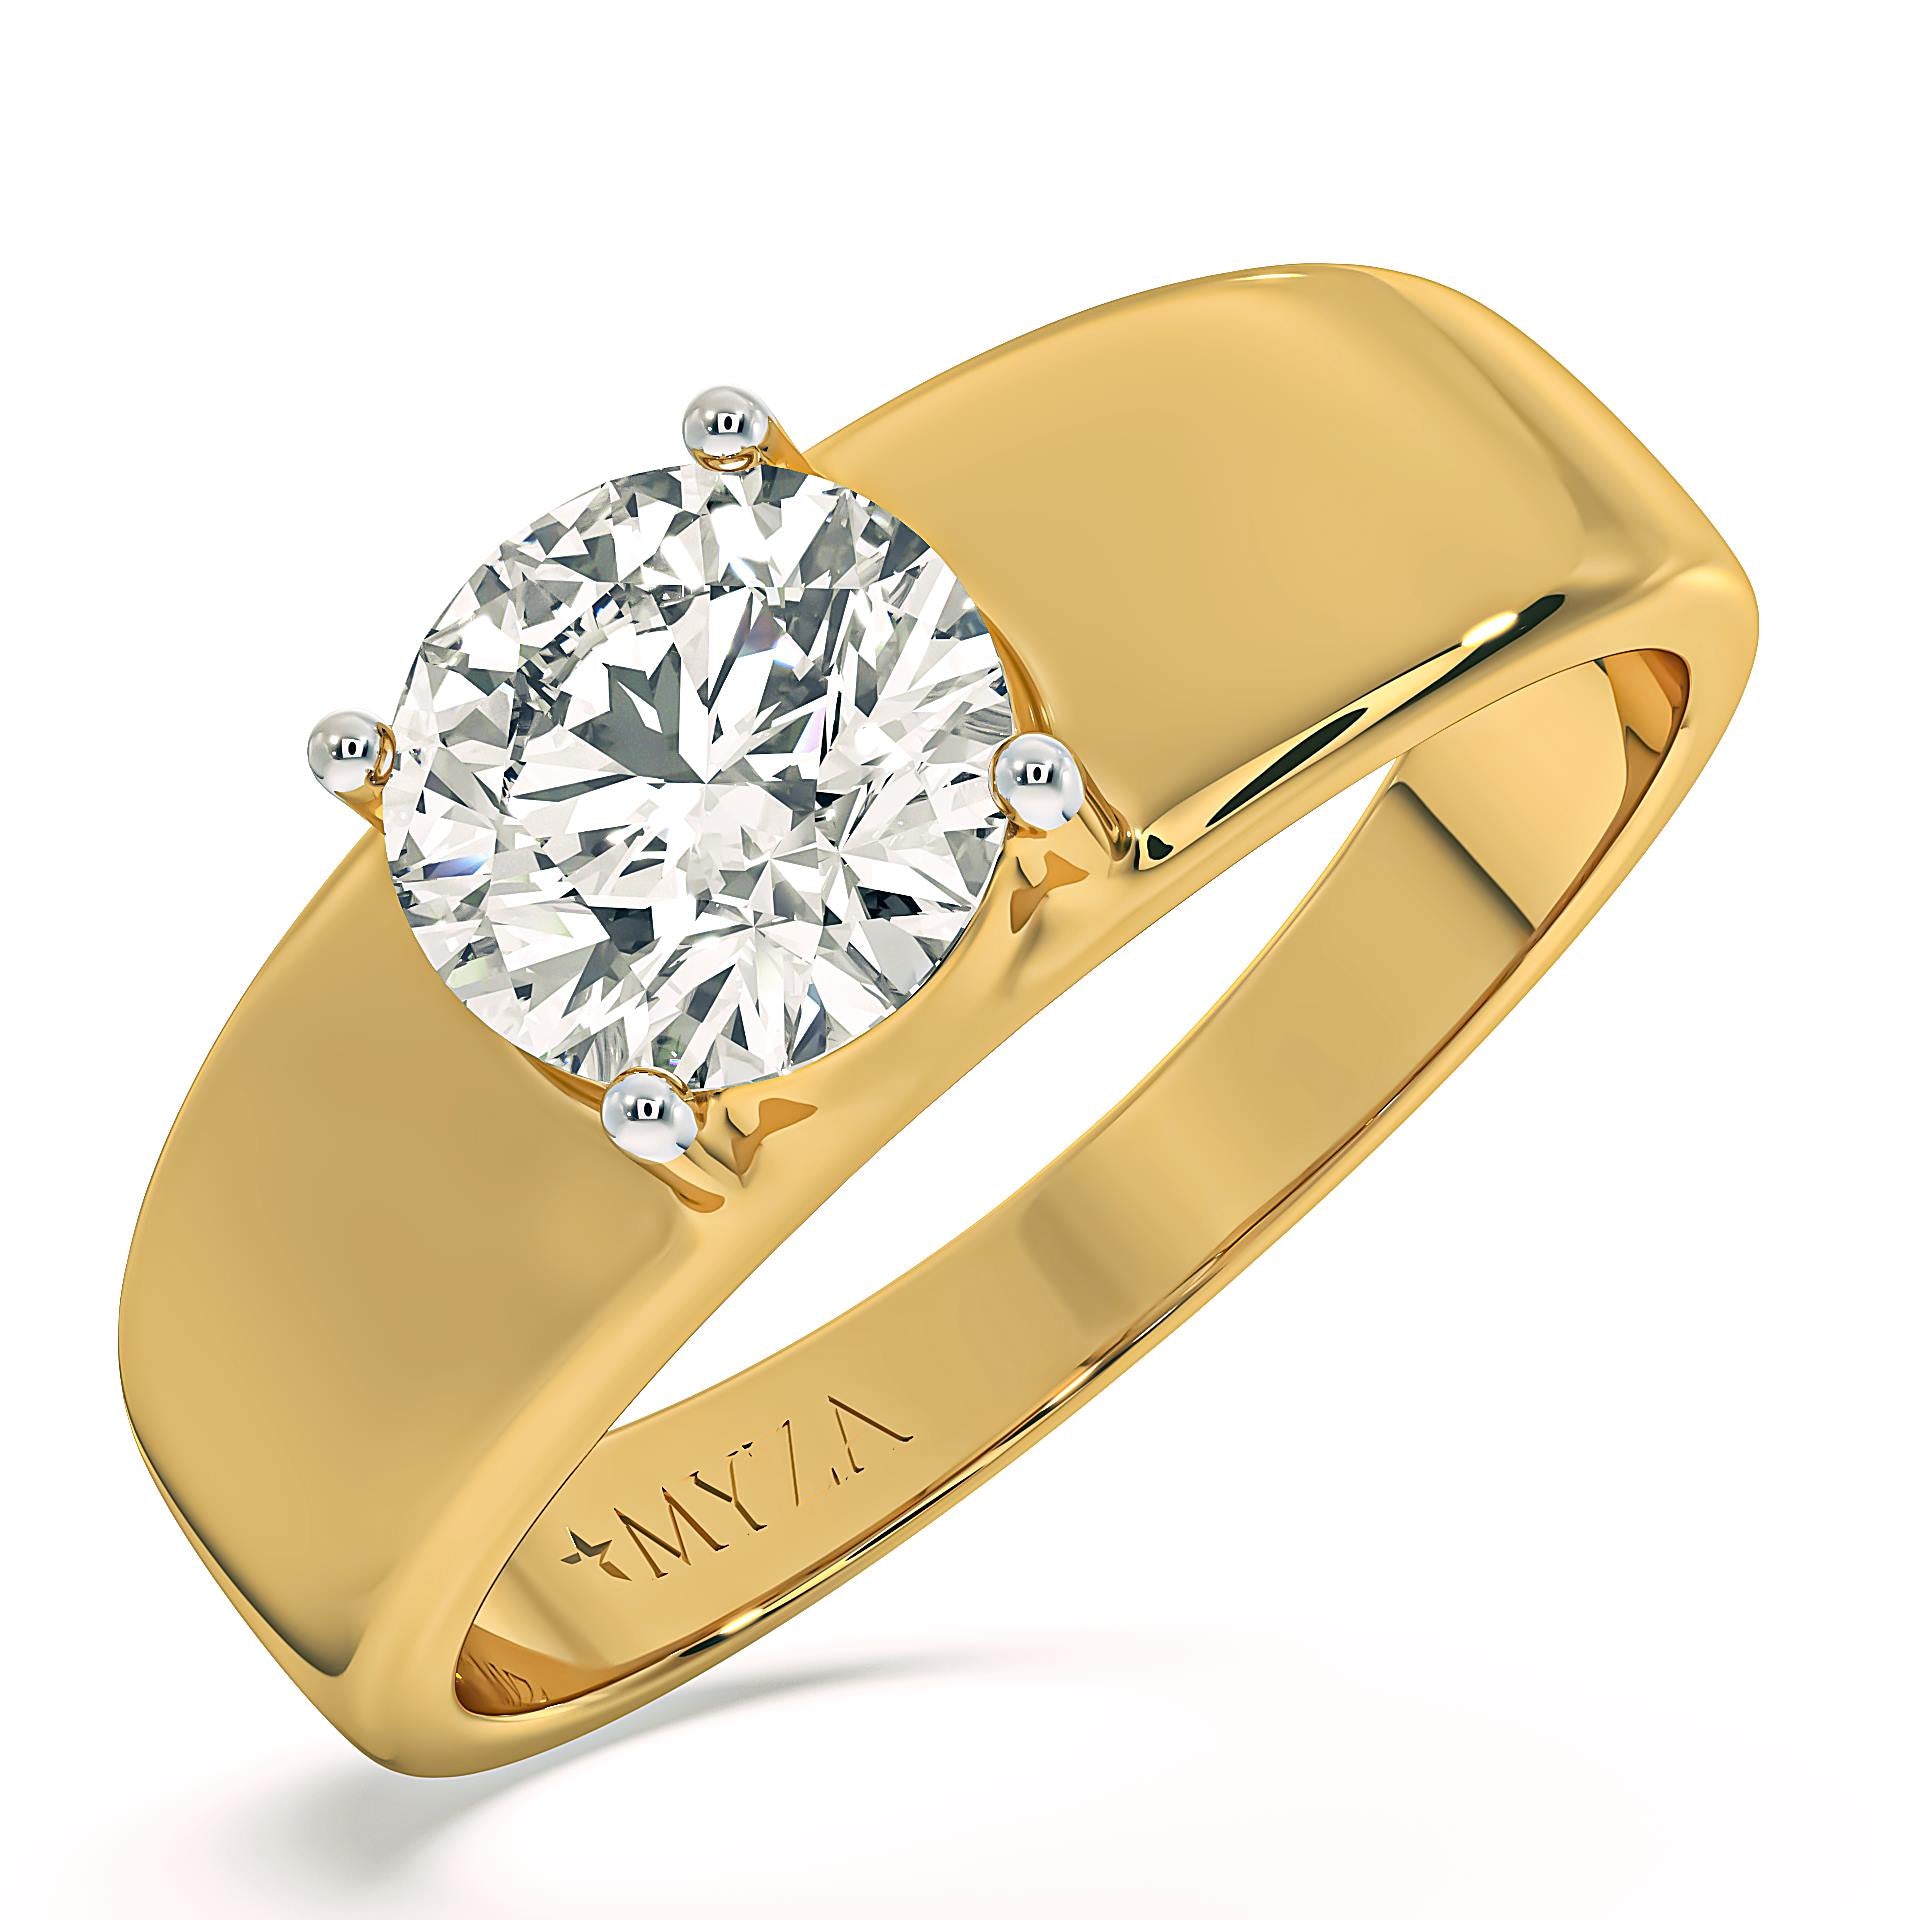 Myza 1-Carat Hallmark Gold Men's Ring - Symbolic Elegance and Affordable Luxury"